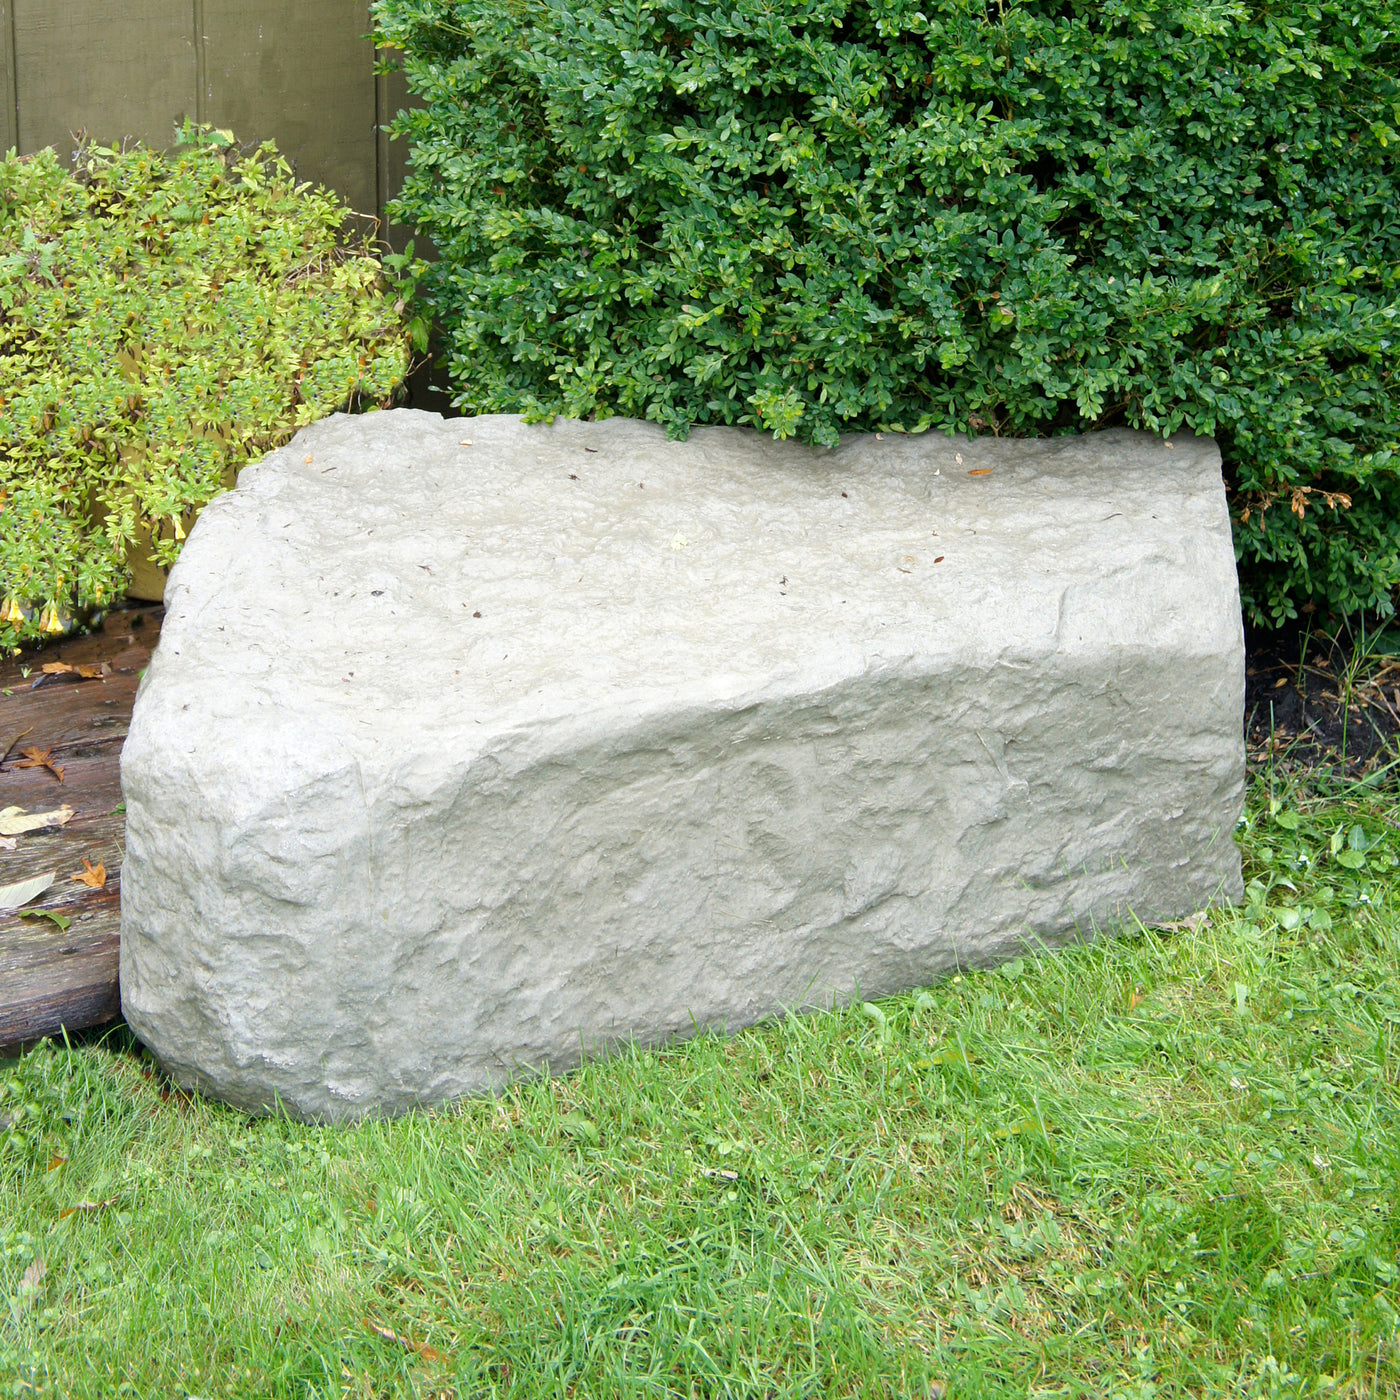 Landscape Rock ERG2000 - Oak Armor Stone - Right Triangle Rock - GreenLivingSupply-Store